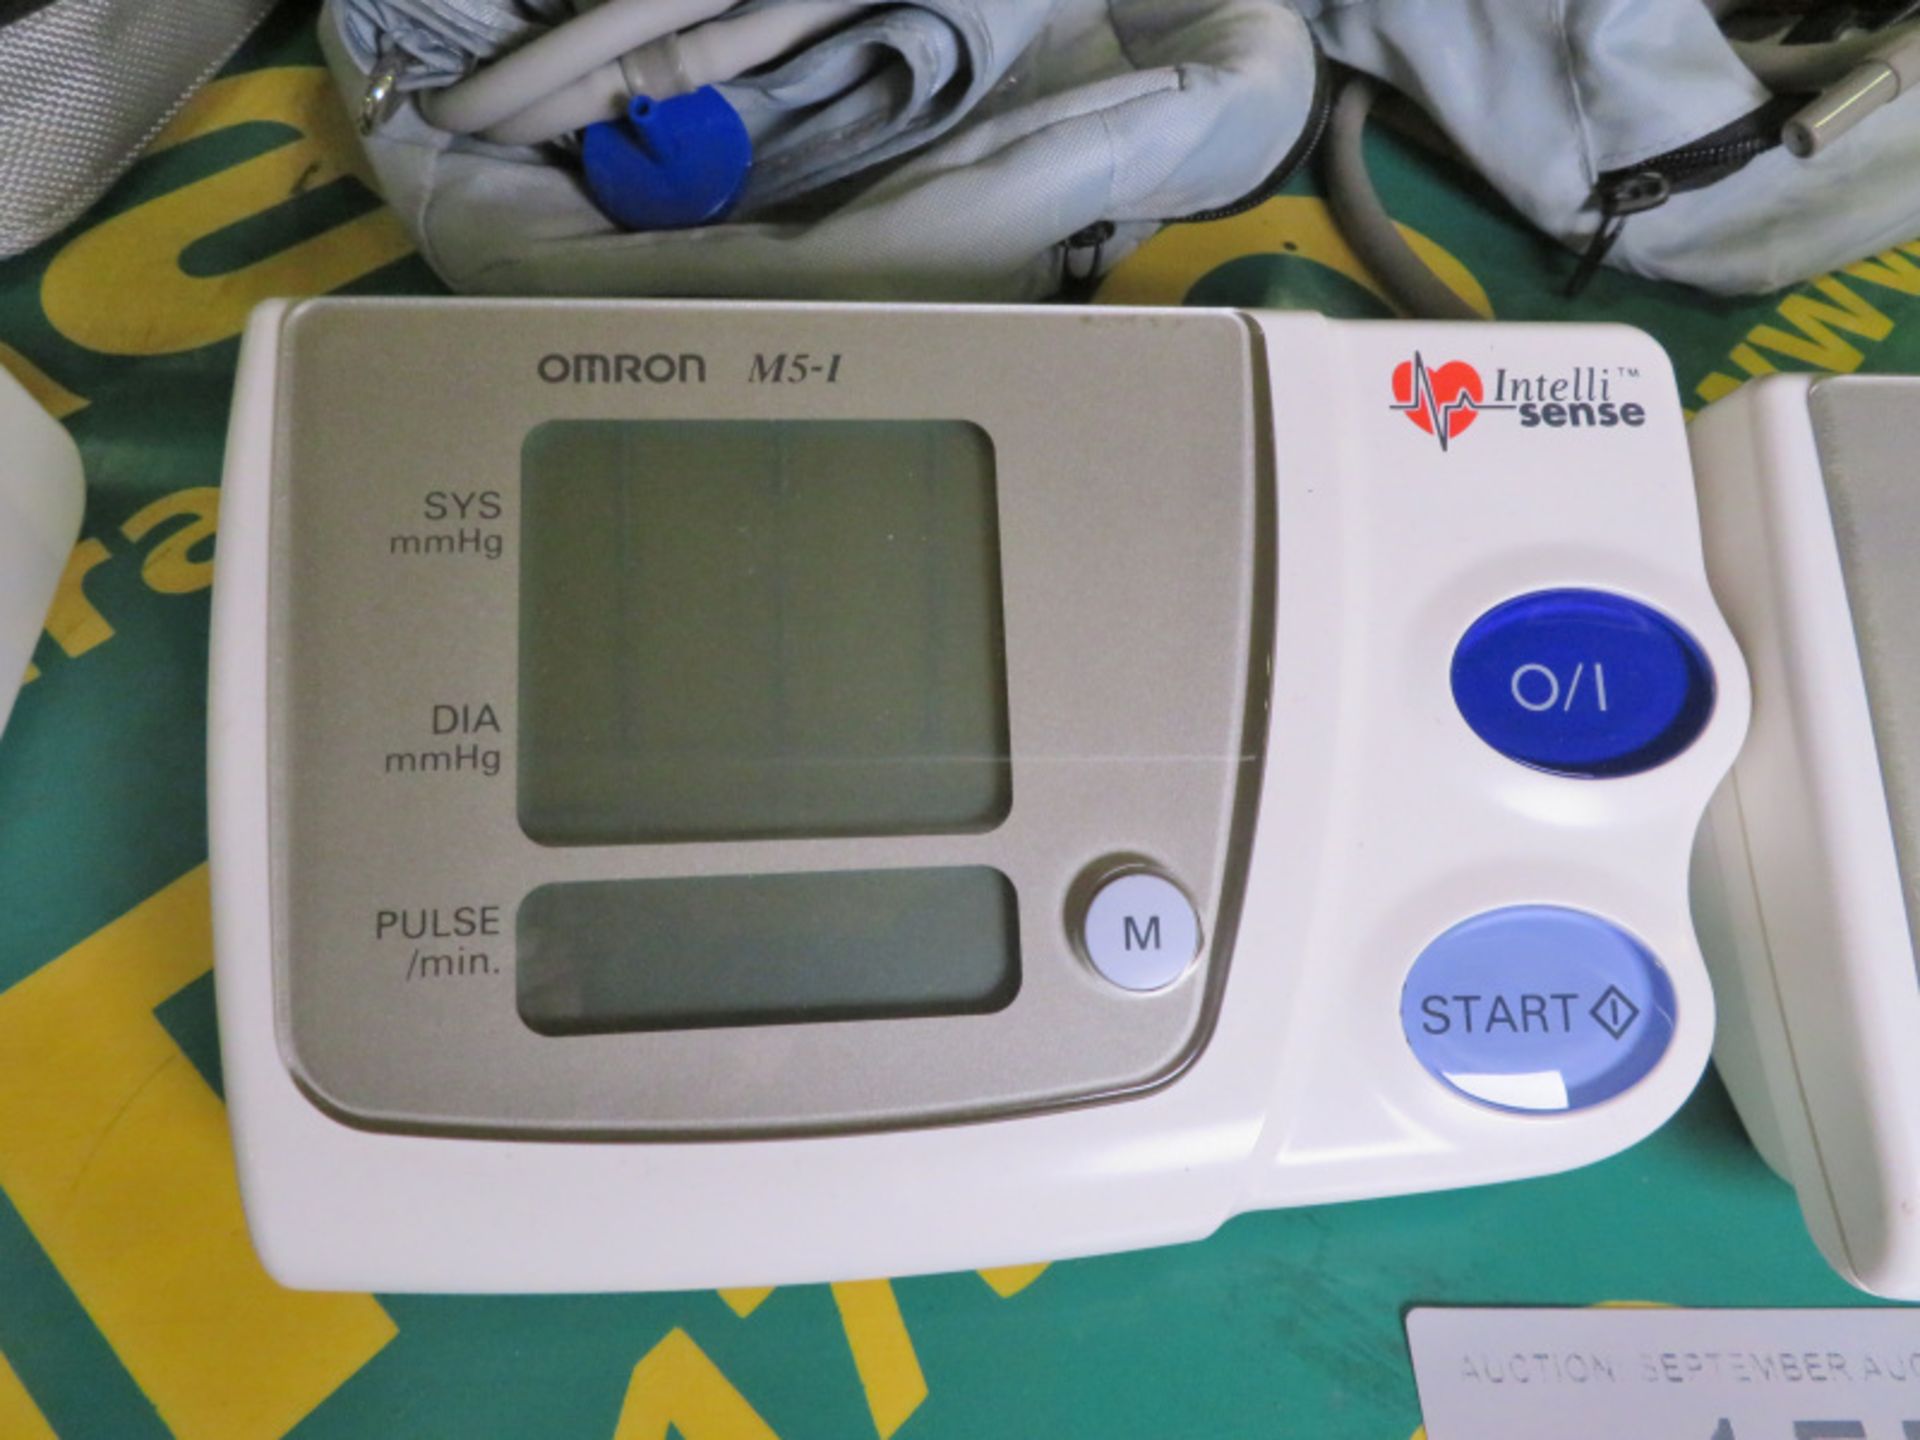 2x Omron M5-I Intelli Sense Blood Pressure Monitors with case - Image 2 of 3